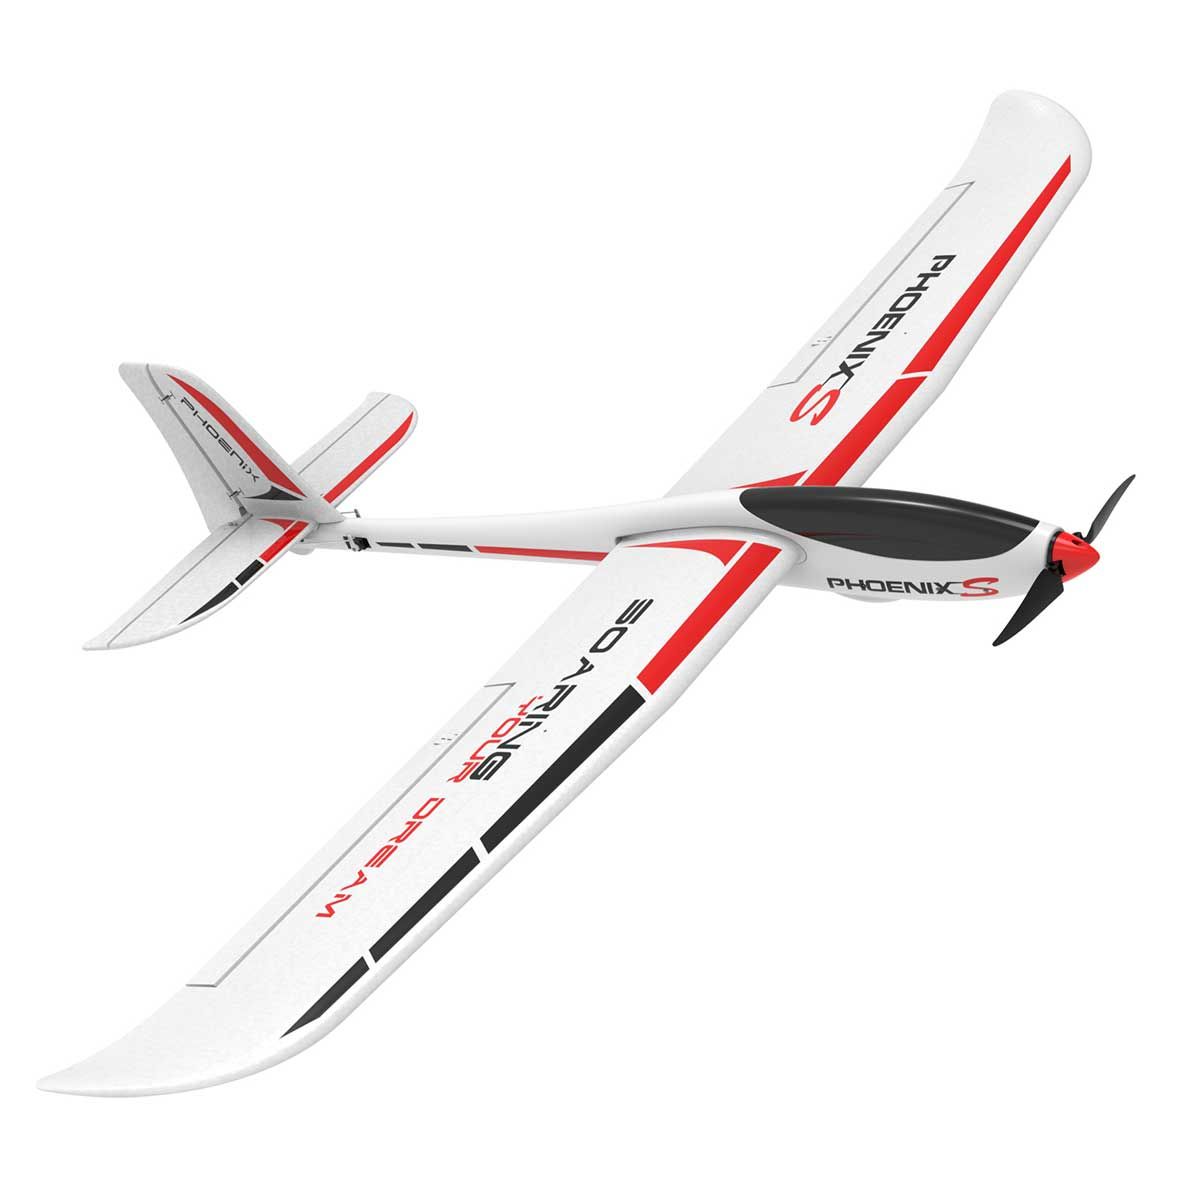 Volantex 1600mm Phoenix 1600 Glider RC Plane PNP No Radio 